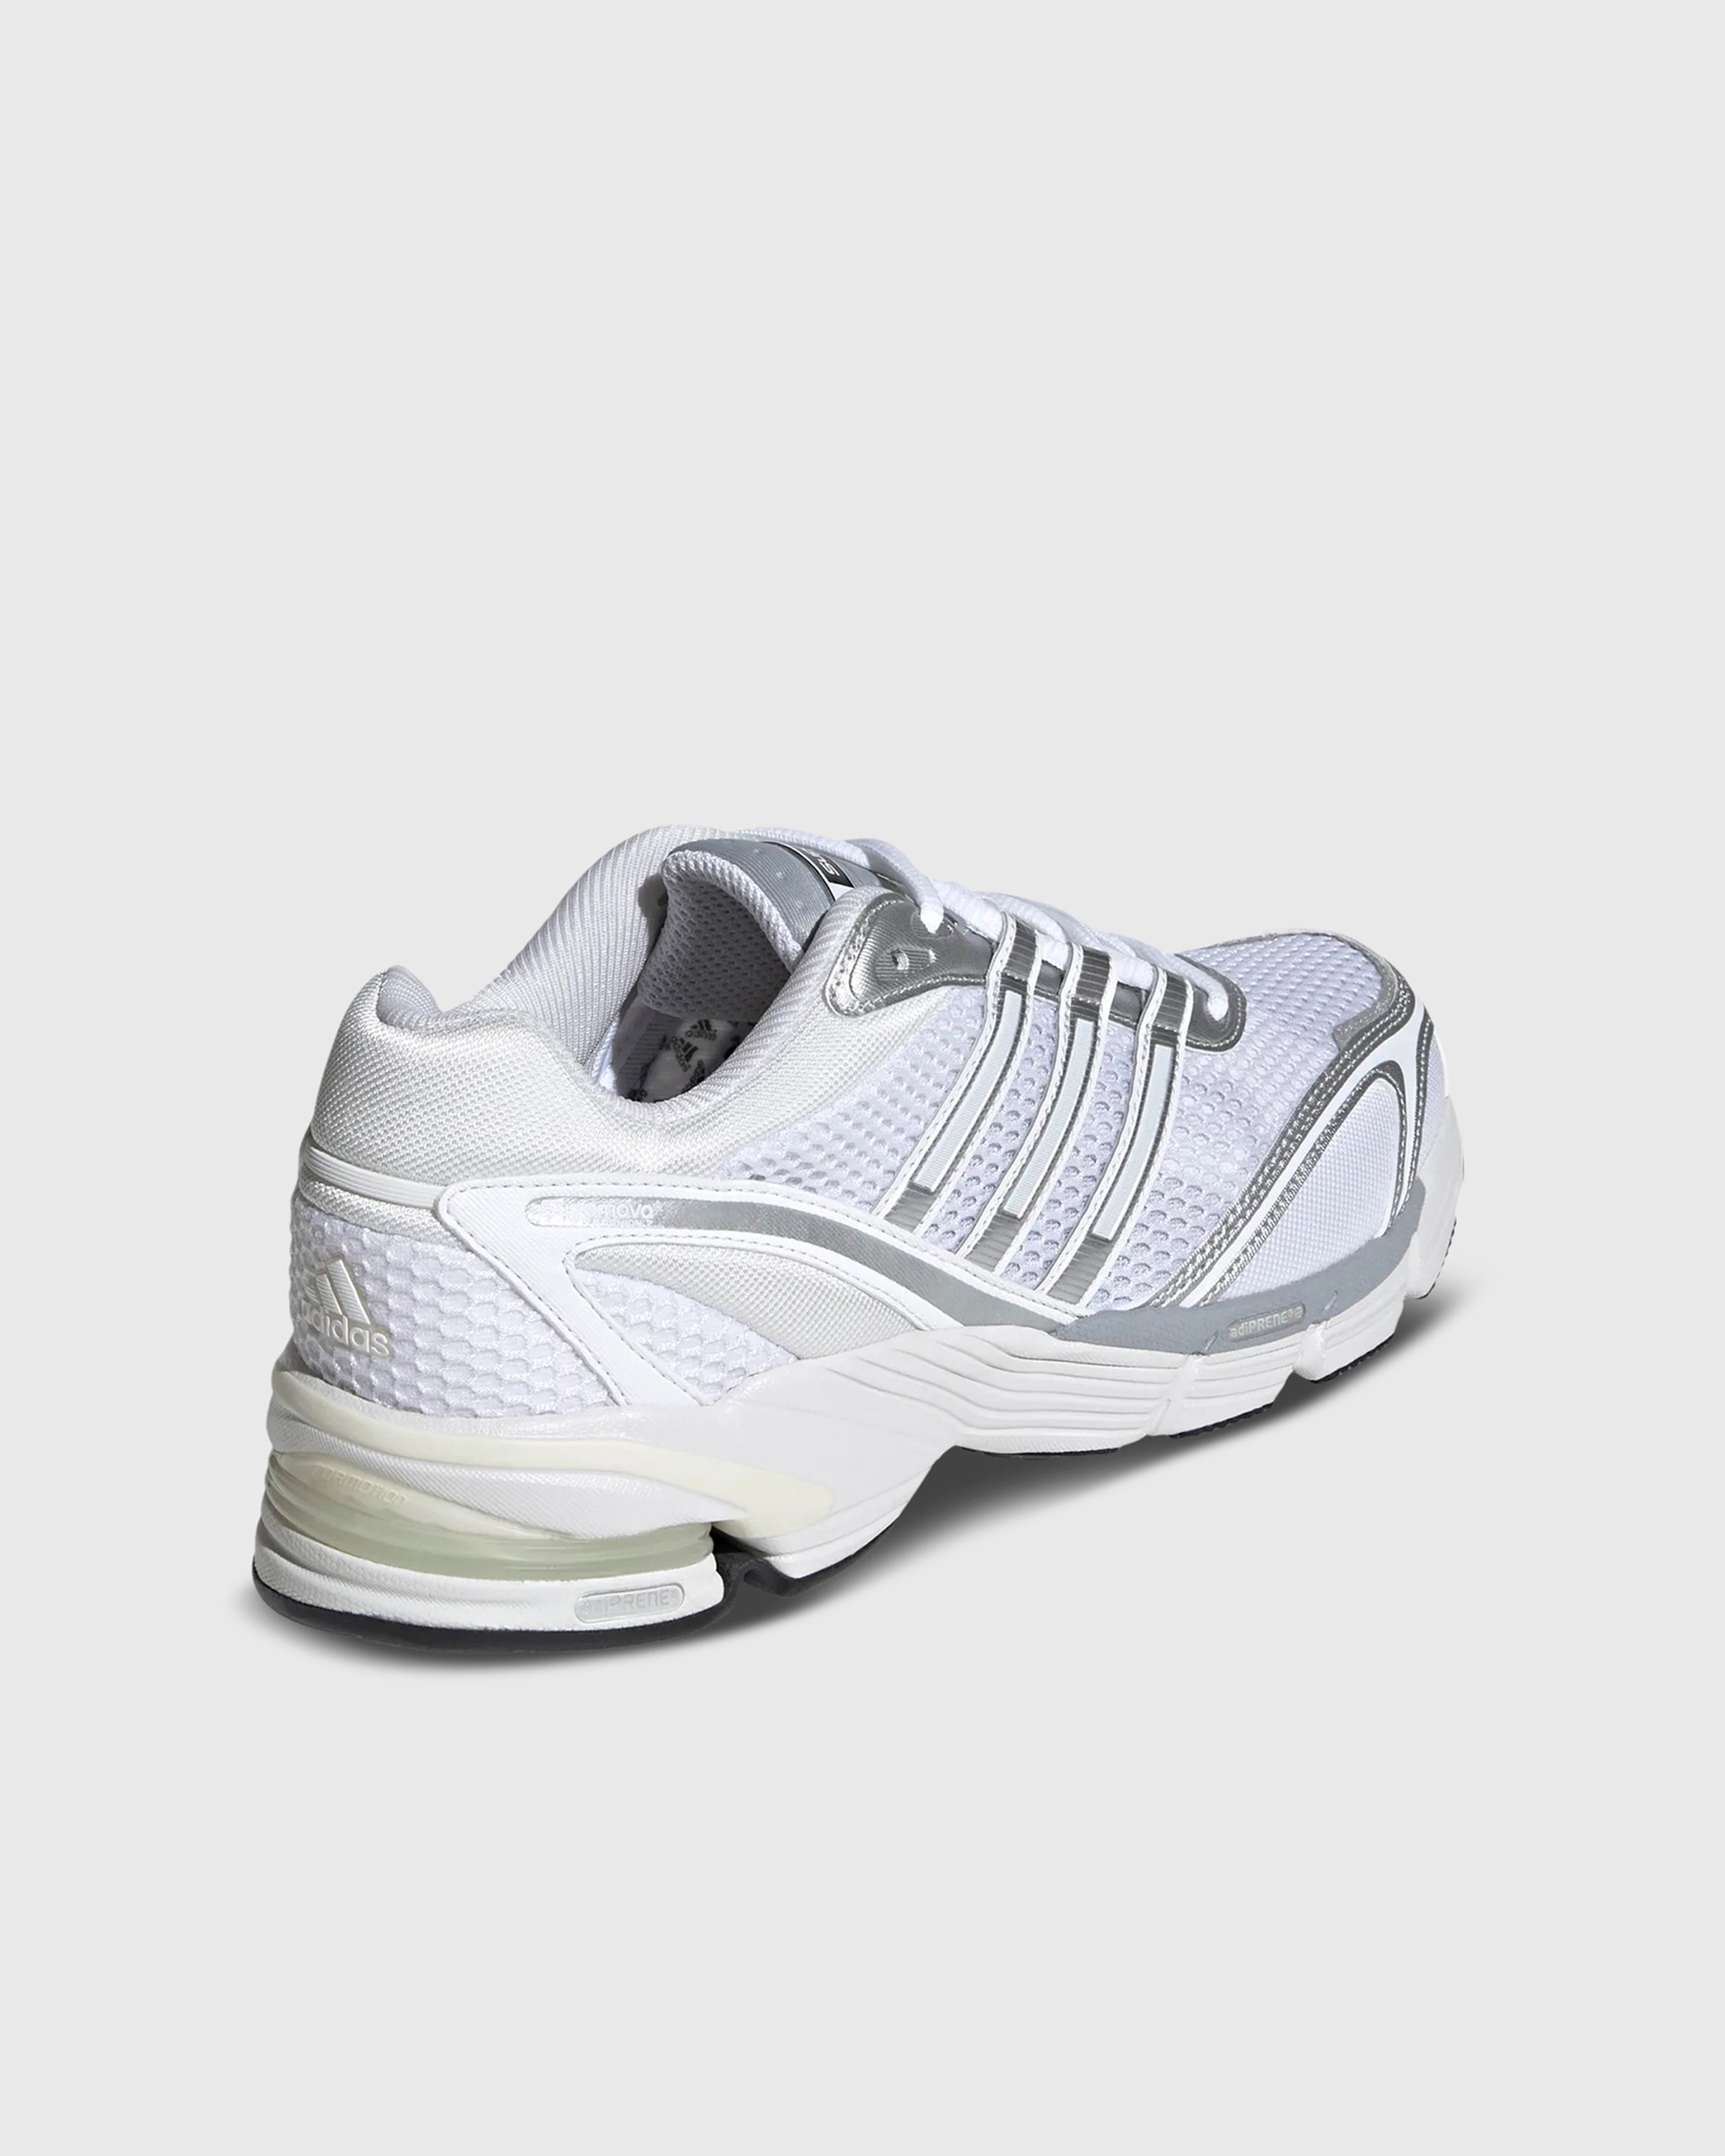 Adidas - SUPERNOVA CUSHION 7 FTWWHT/SILVMT/CRYWHT - Footwear - White - Image 4